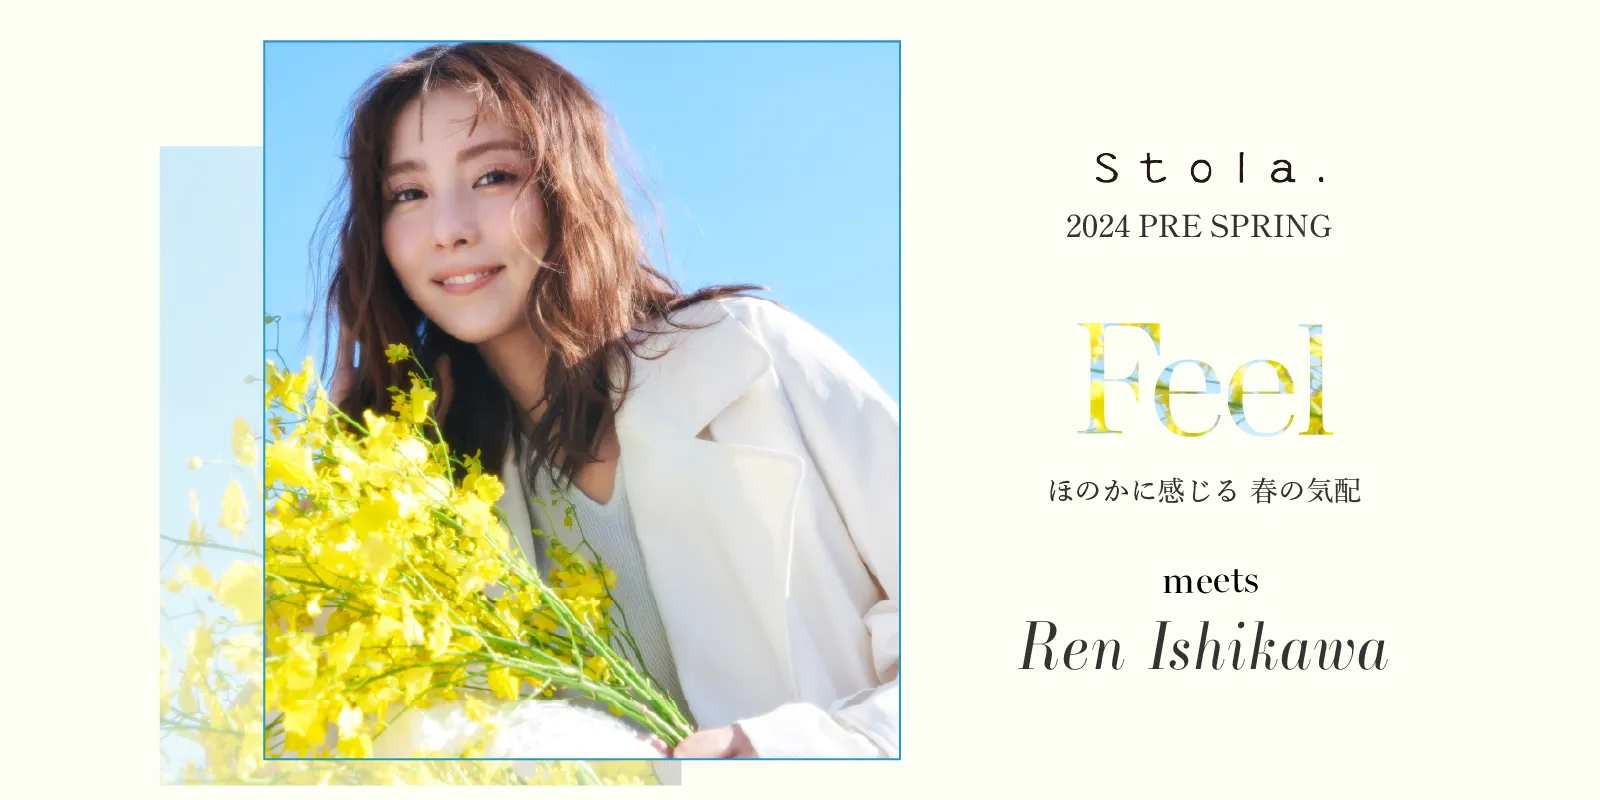 Feel ほのかに感じる 春の気配 meets Ren Ishikawa